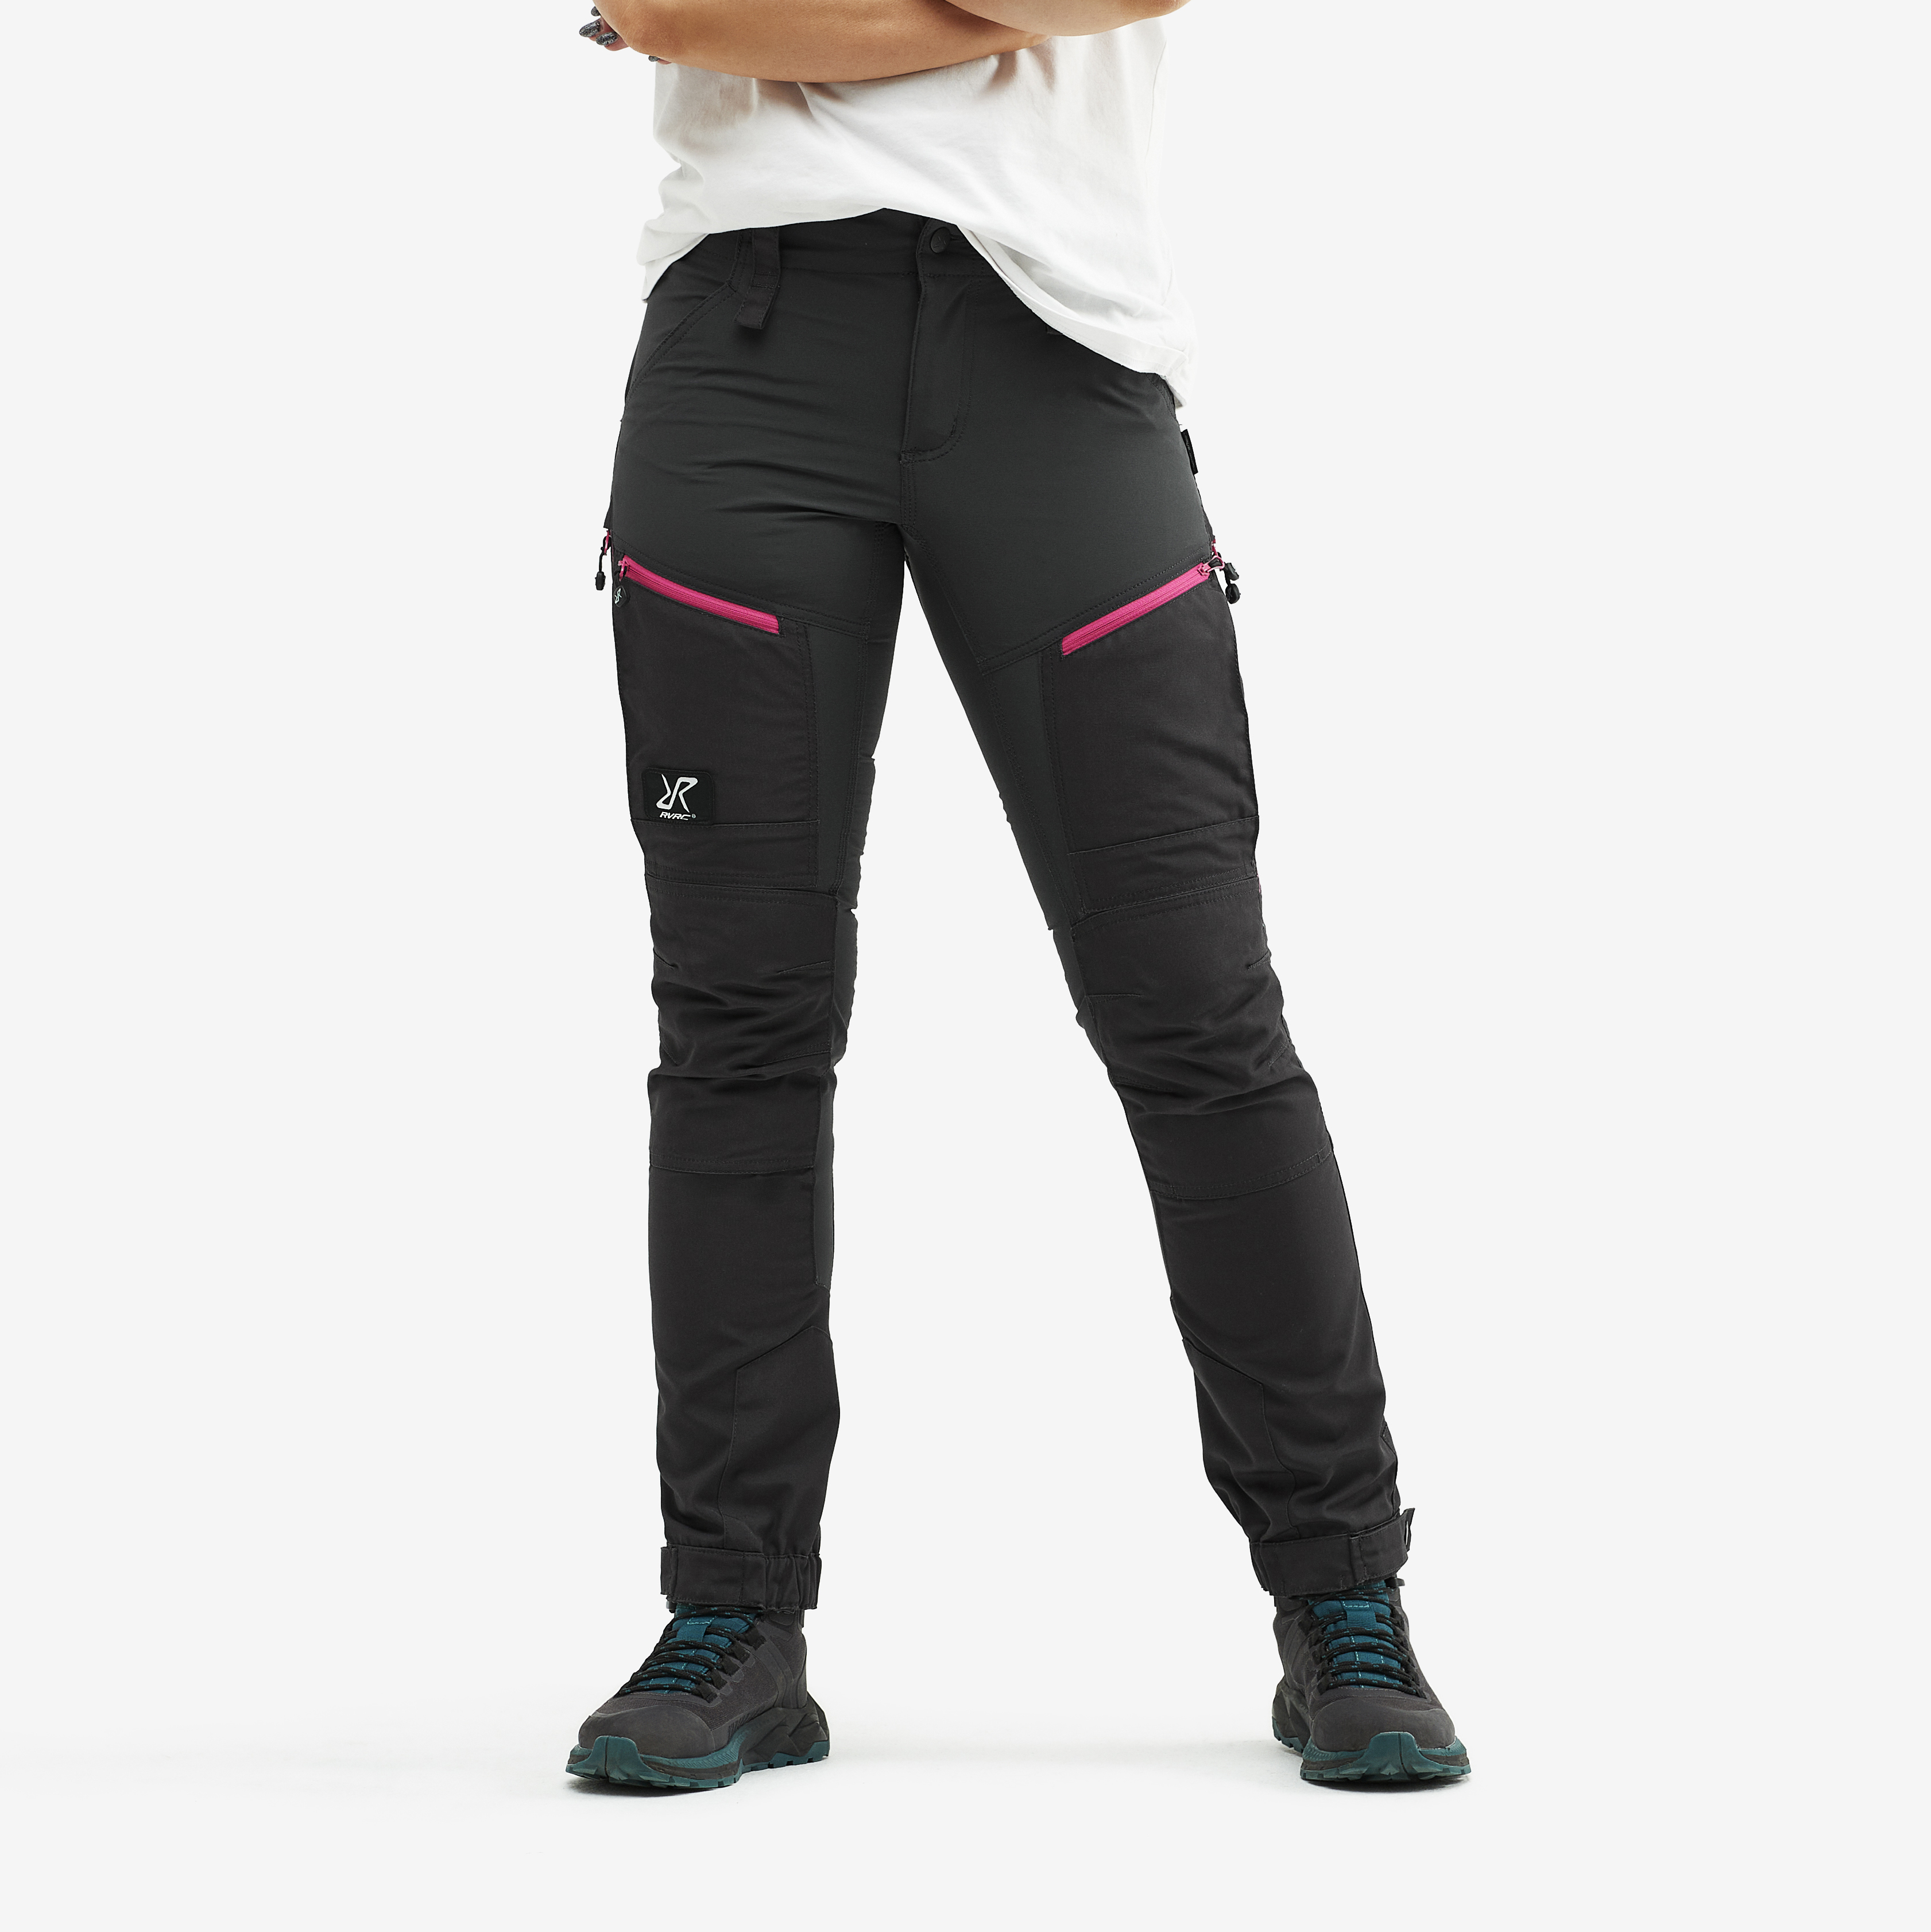 RVRC GP Pro Short hiking trousers for women in dark grey